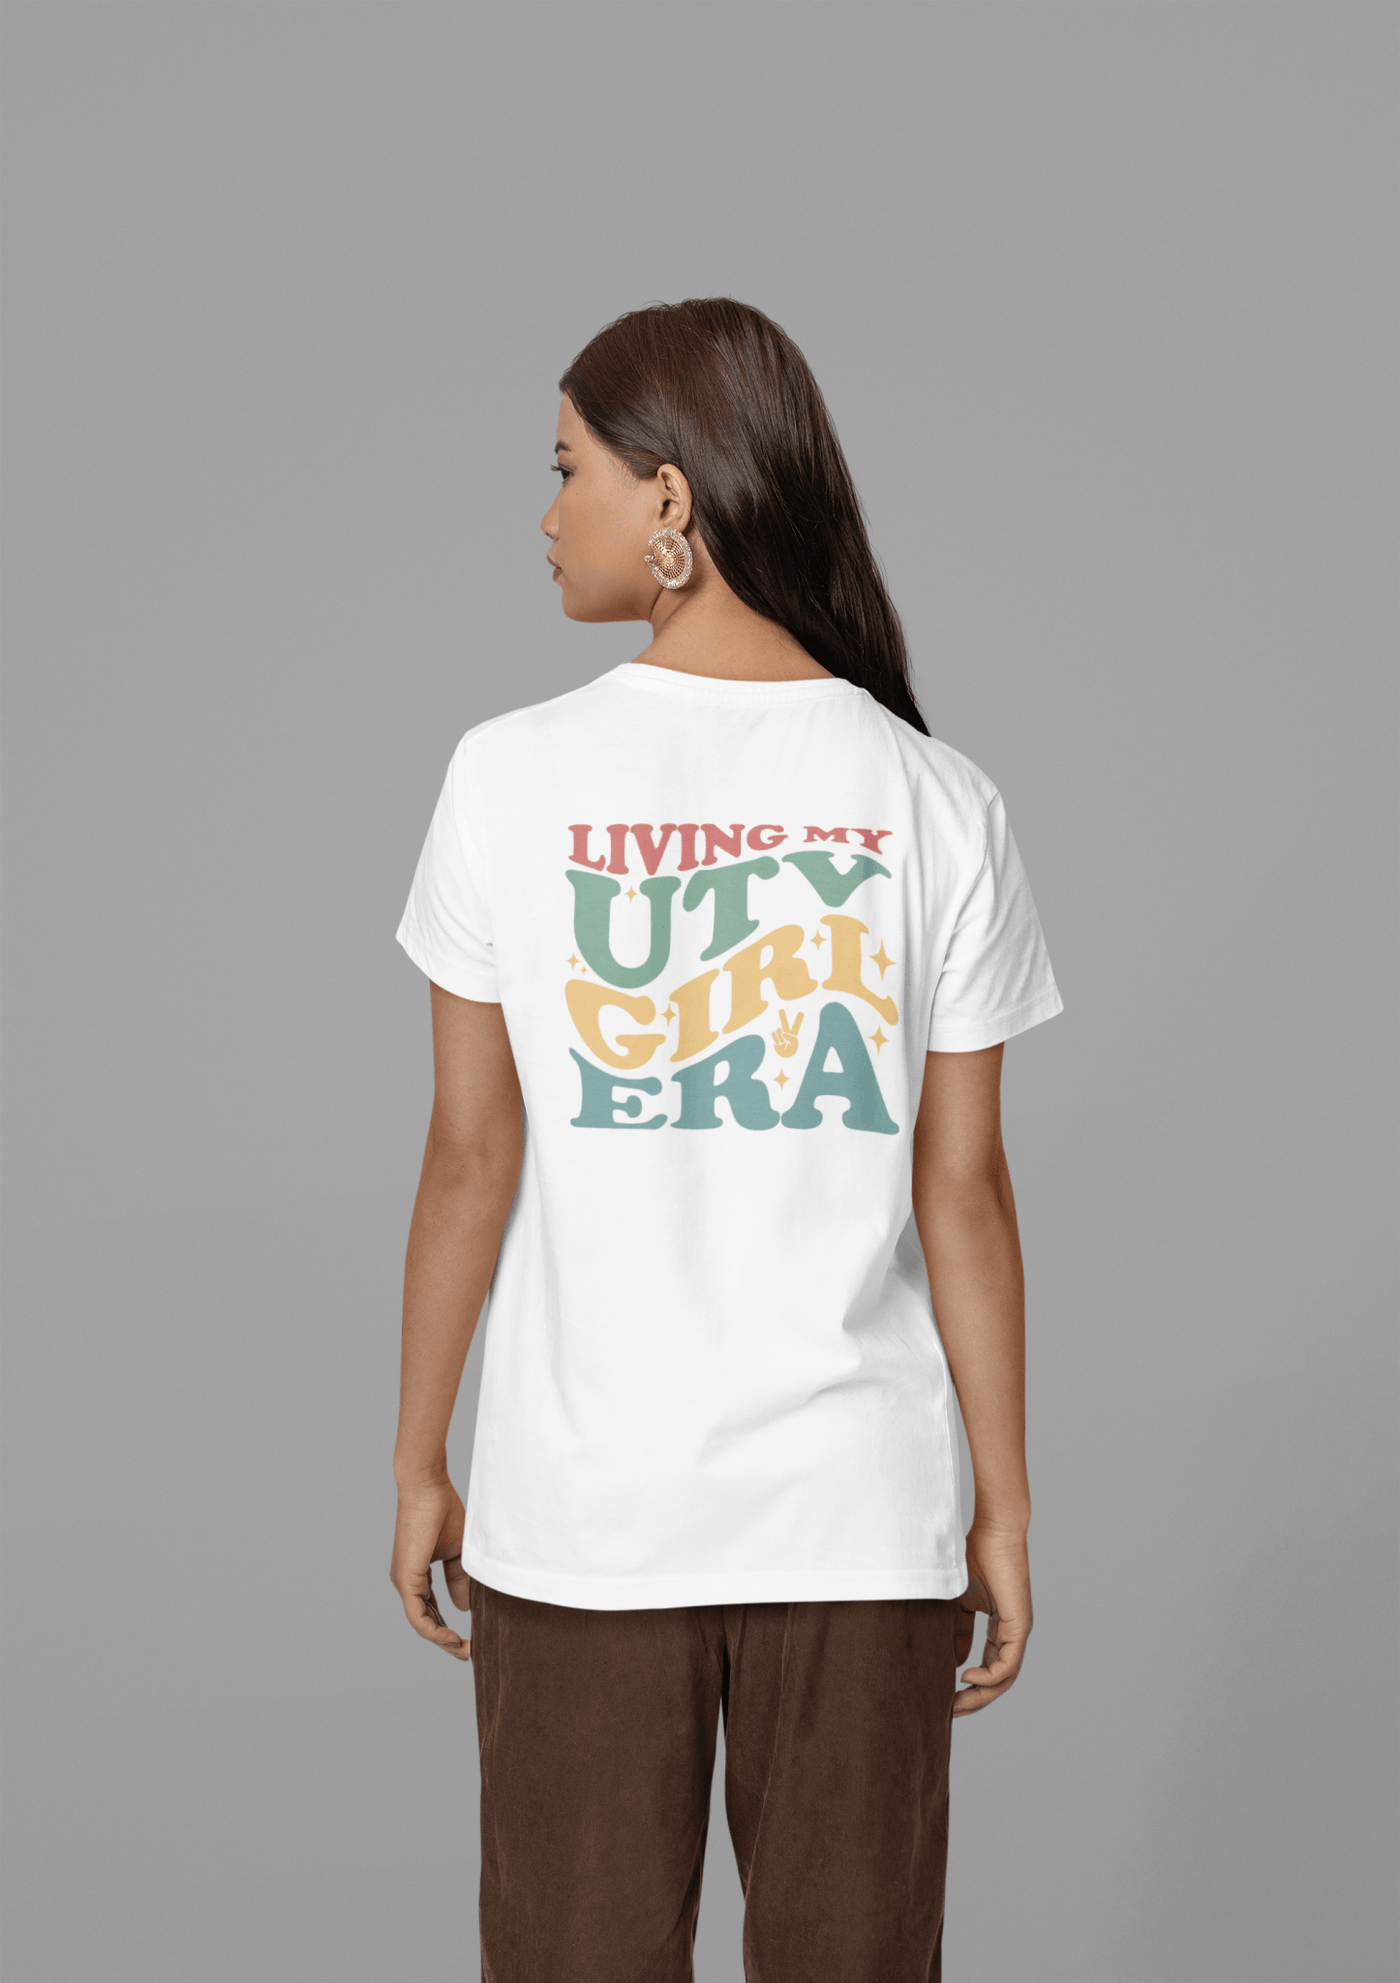 Living My UTV Girl Era Tee Shirt - Goats Trail Off-Road Apparel Company